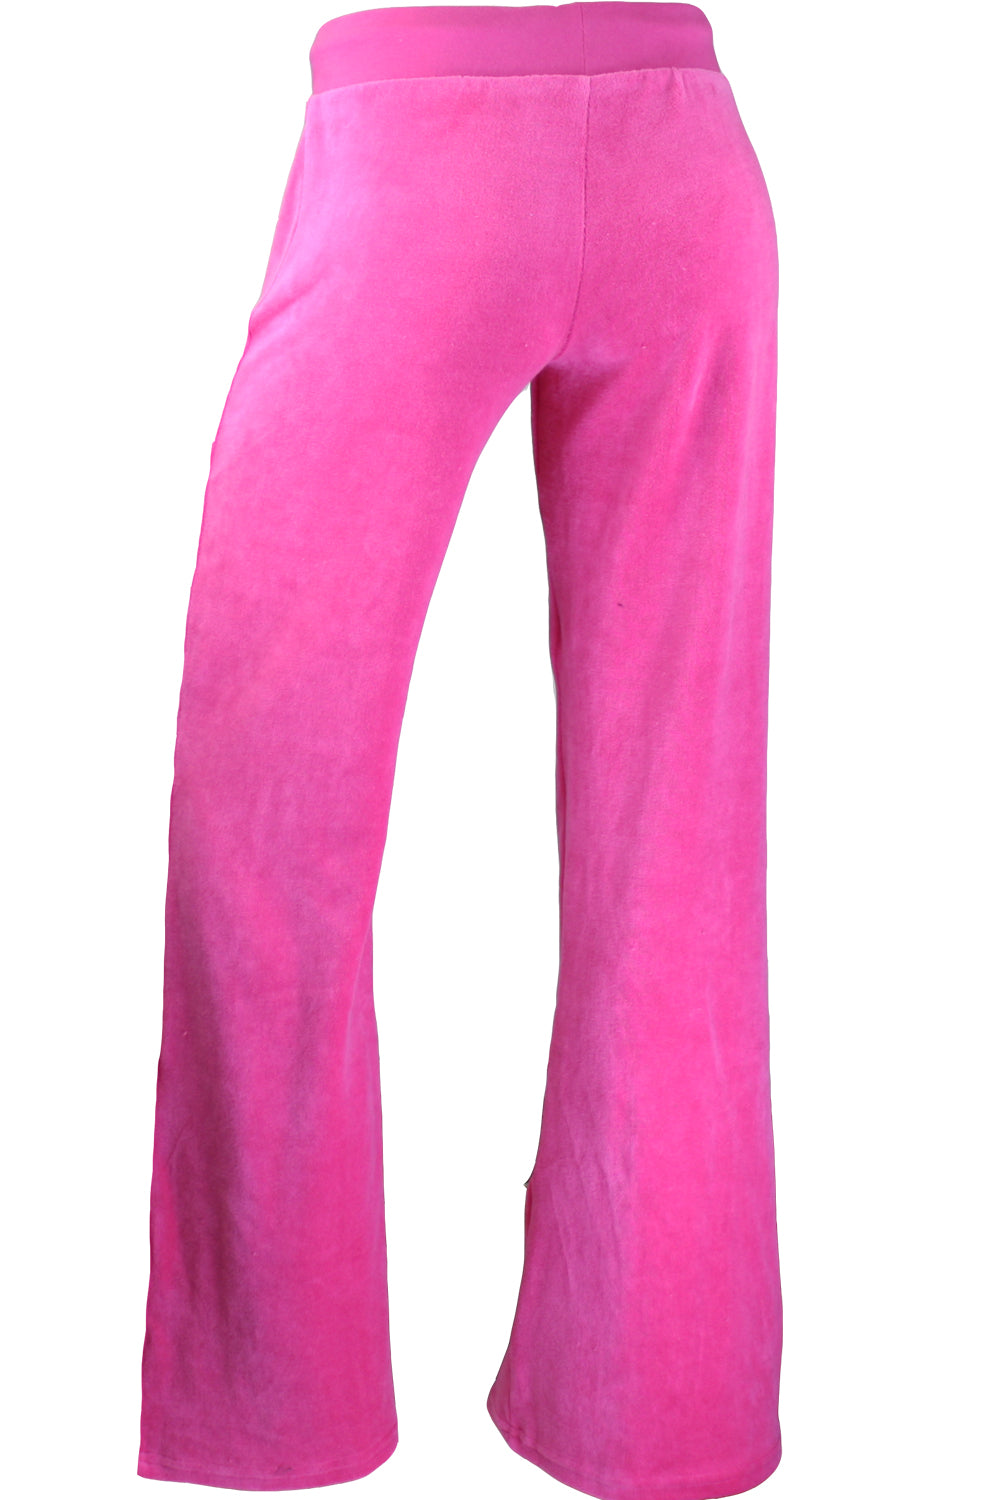 Womens Hot Pink Velour Pants, Sweatpants